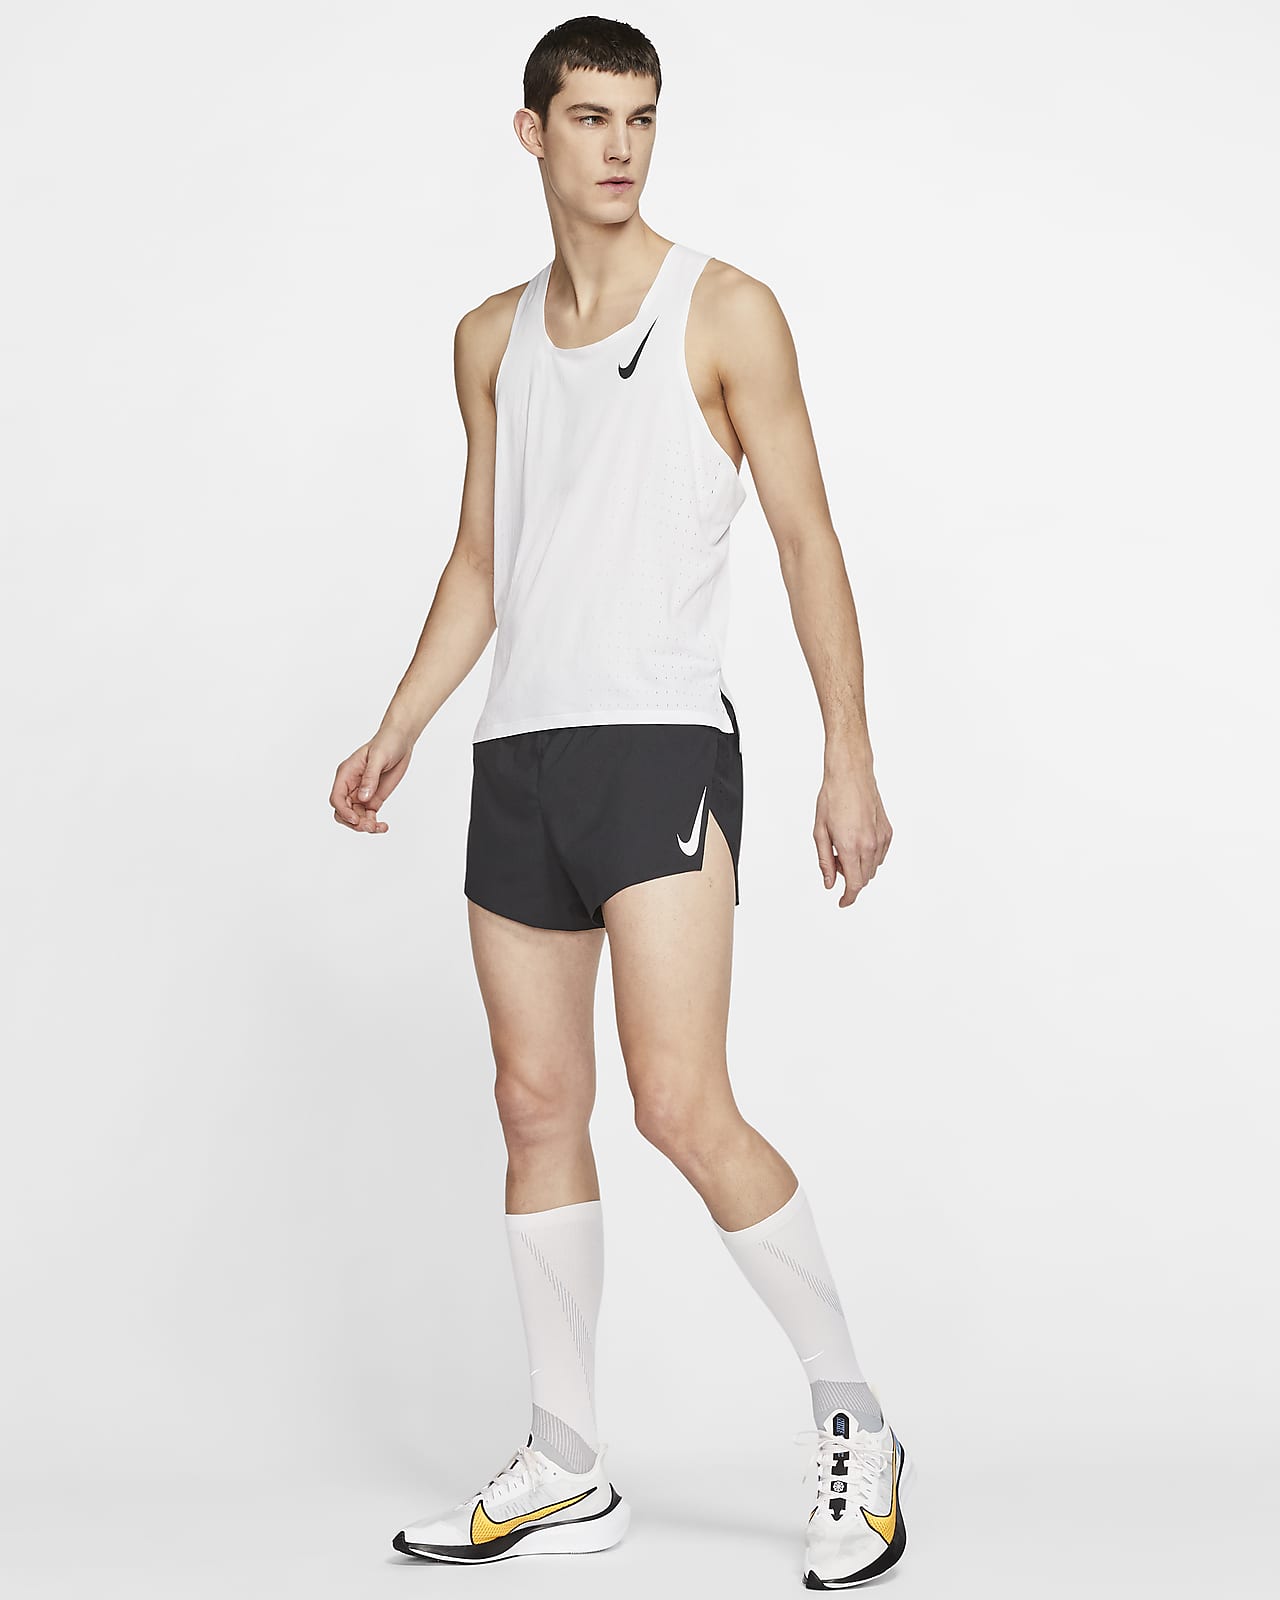 Nike AeroSwift Men's 5cm (approx.) Running Shorts. Nike LU